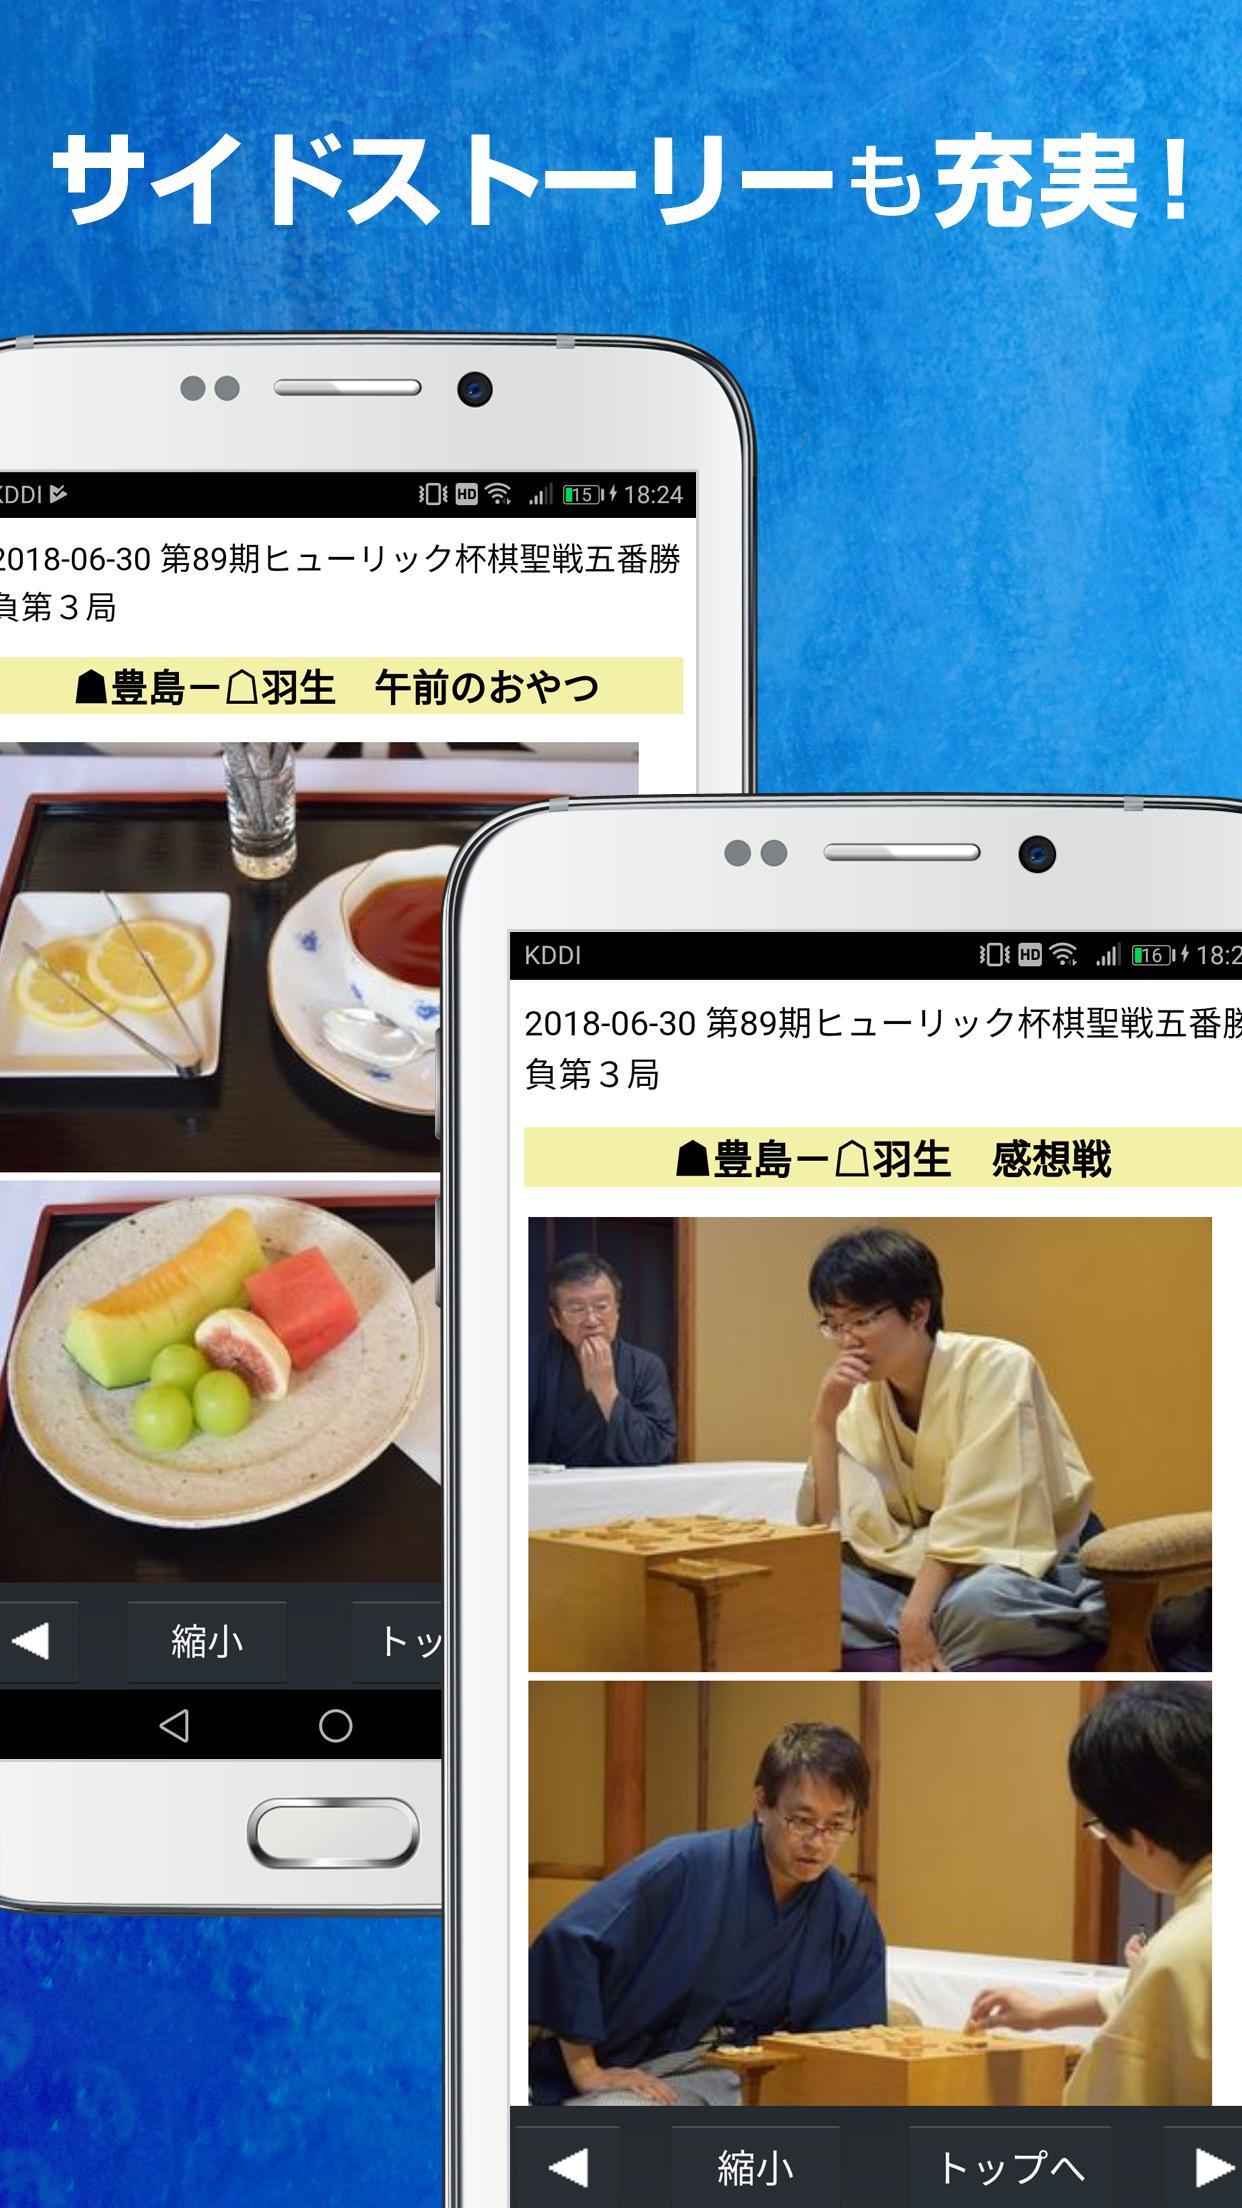 Shogi Live Subscription 2014 7.17 Screenshot 8